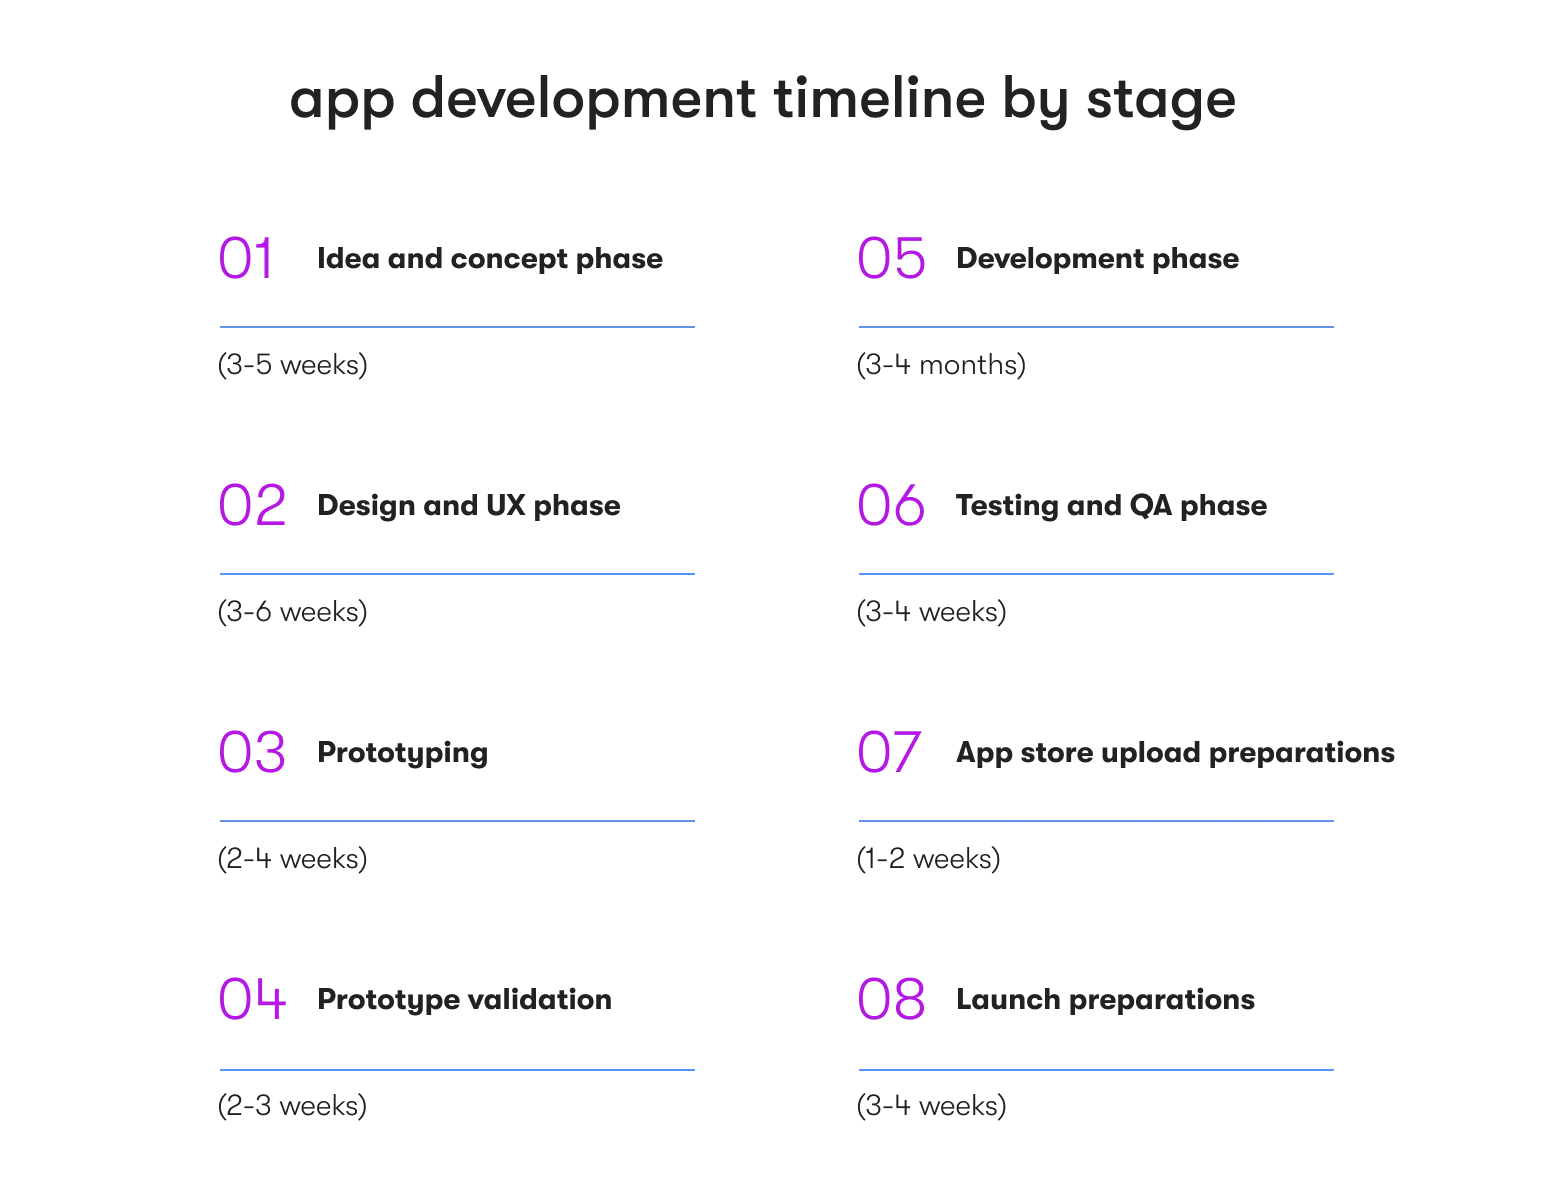 app development timeline by stage